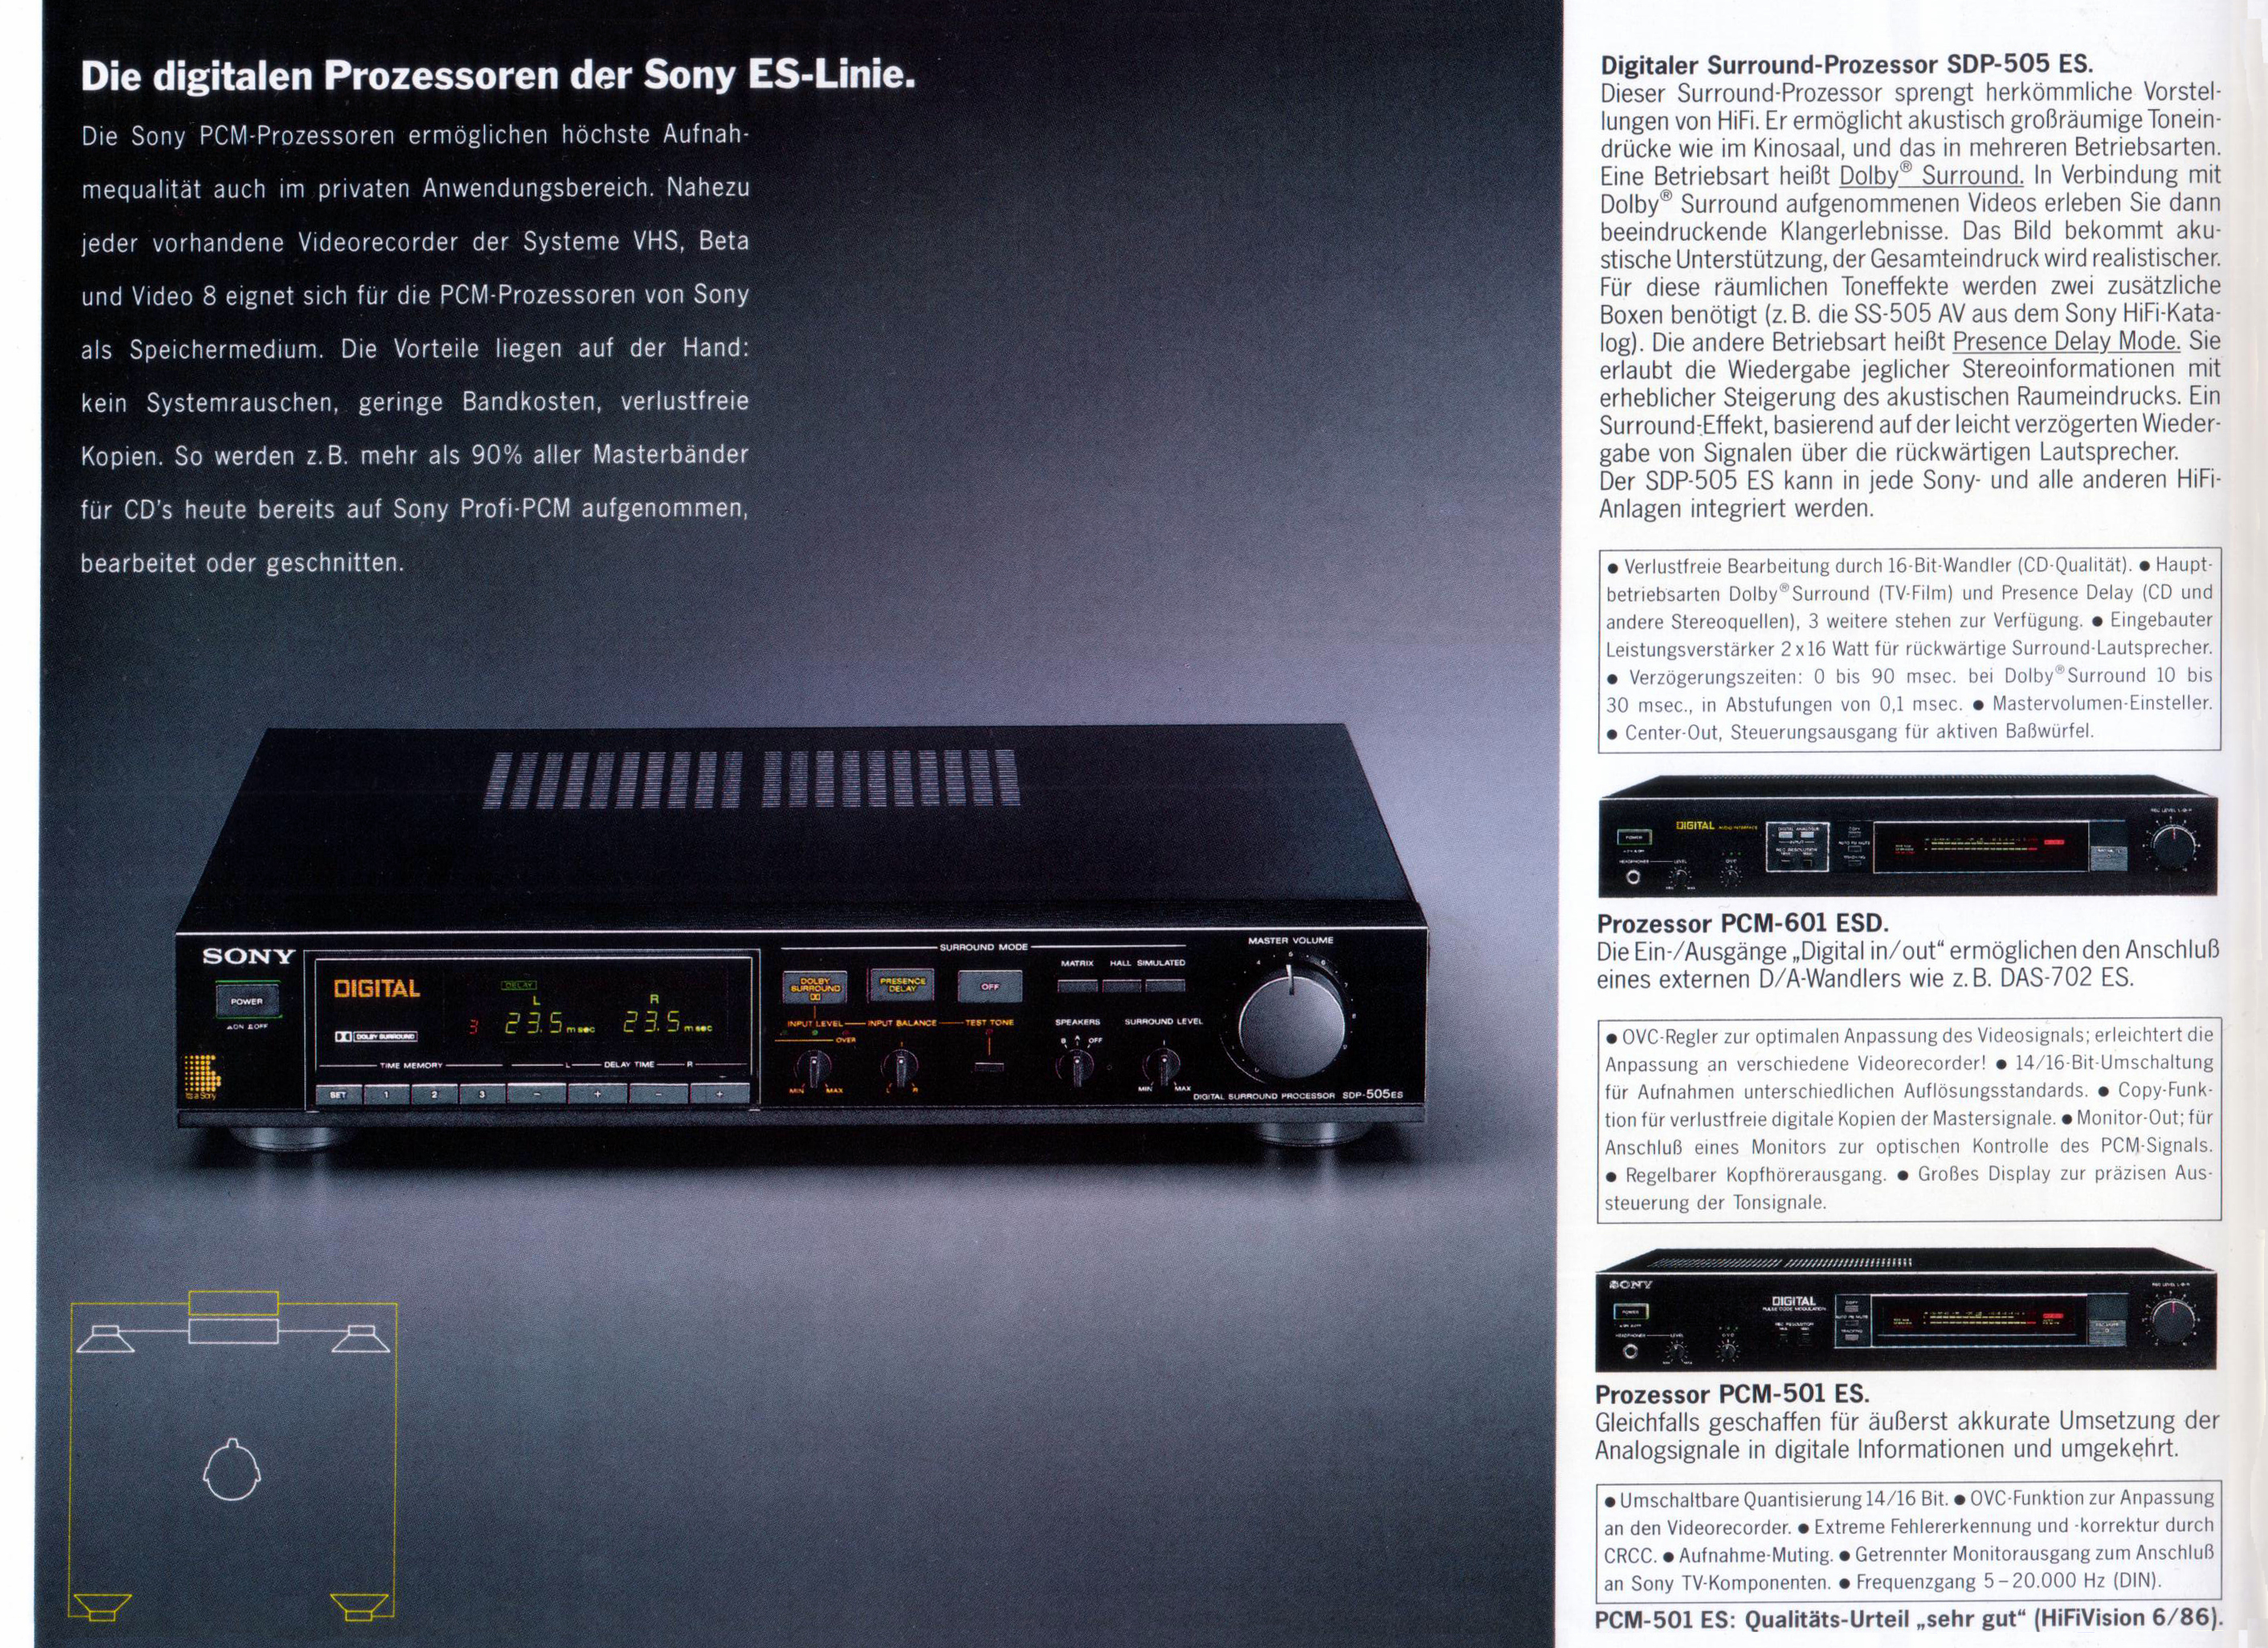 Sony SDP-505 ES-PCM 501 ES-601 ESD-Prospekt-1986.jpg